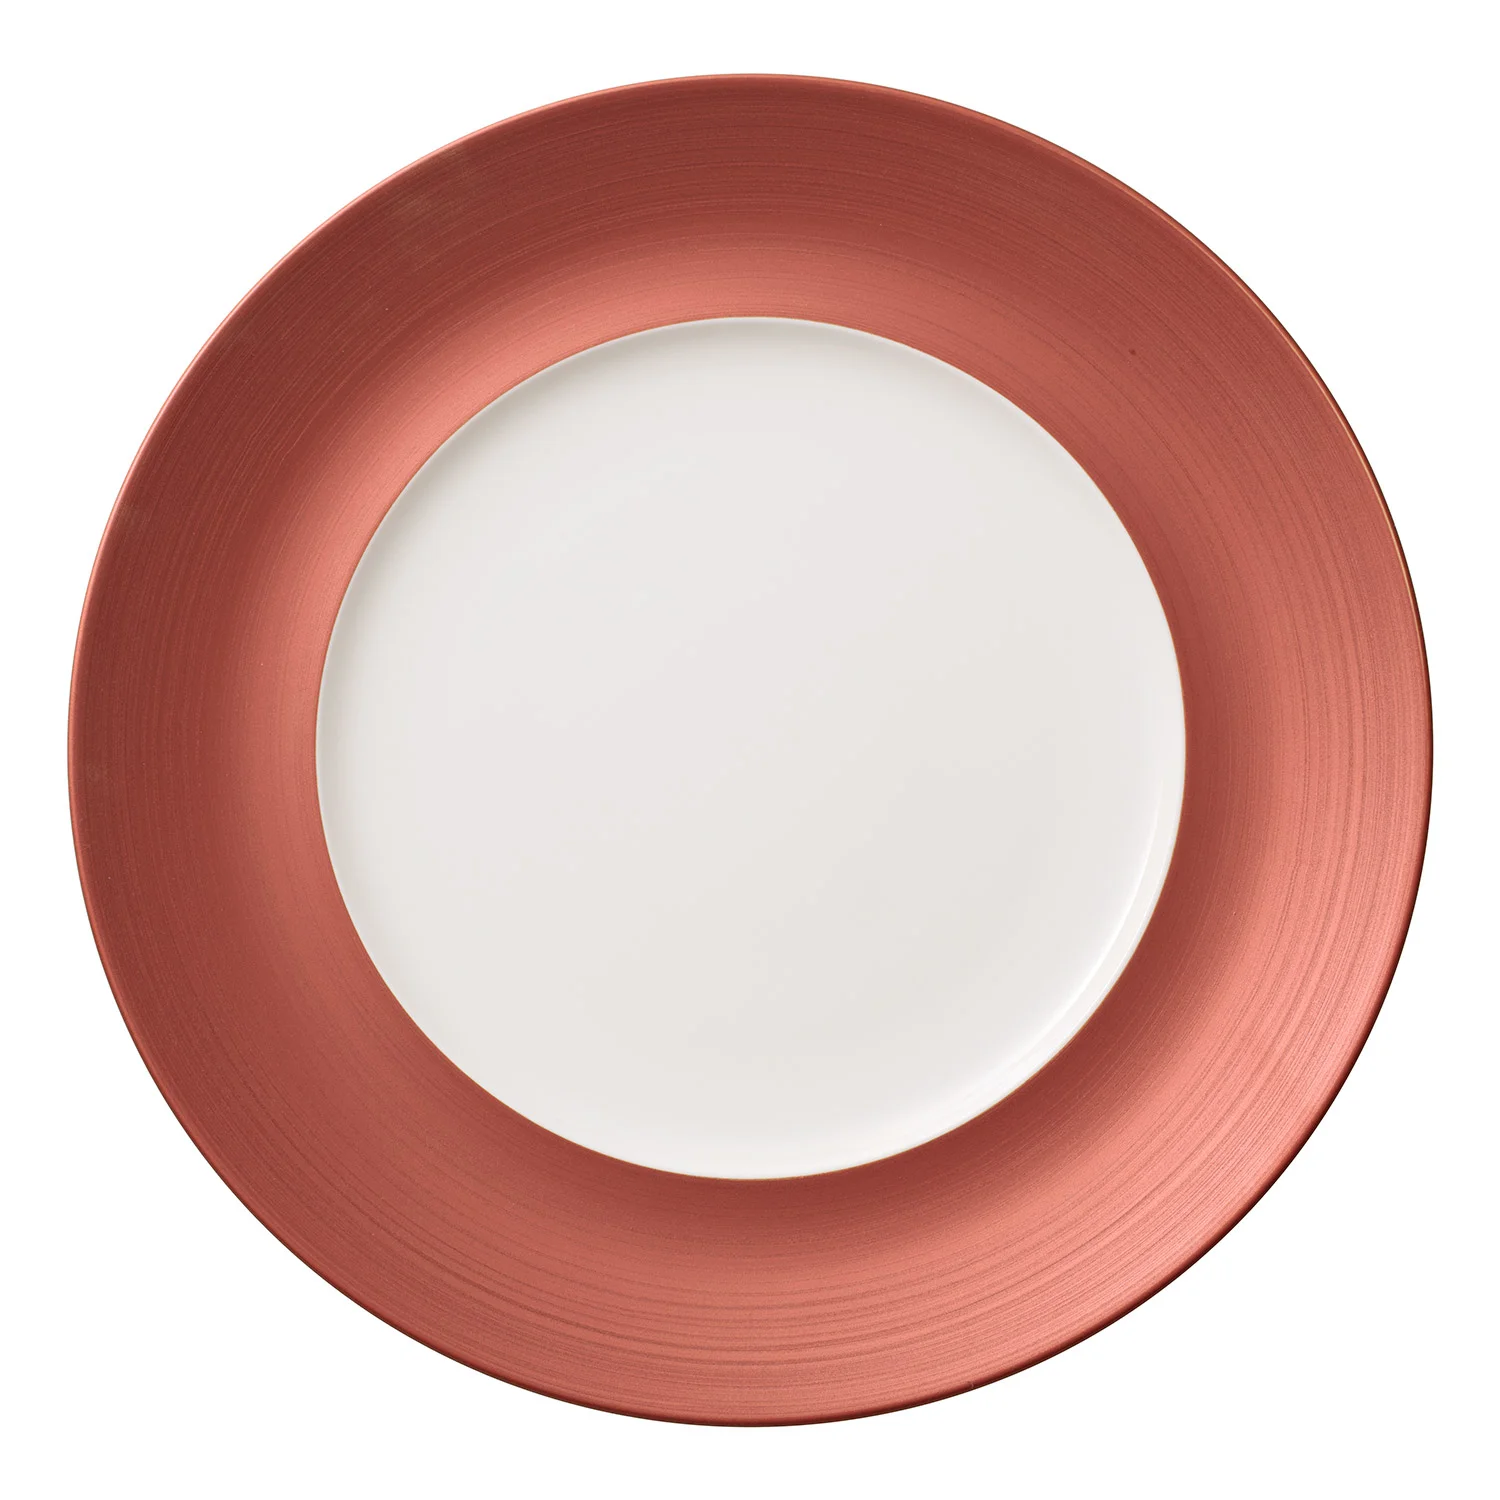 Manufacture Glow Плоская тарелка 29 см